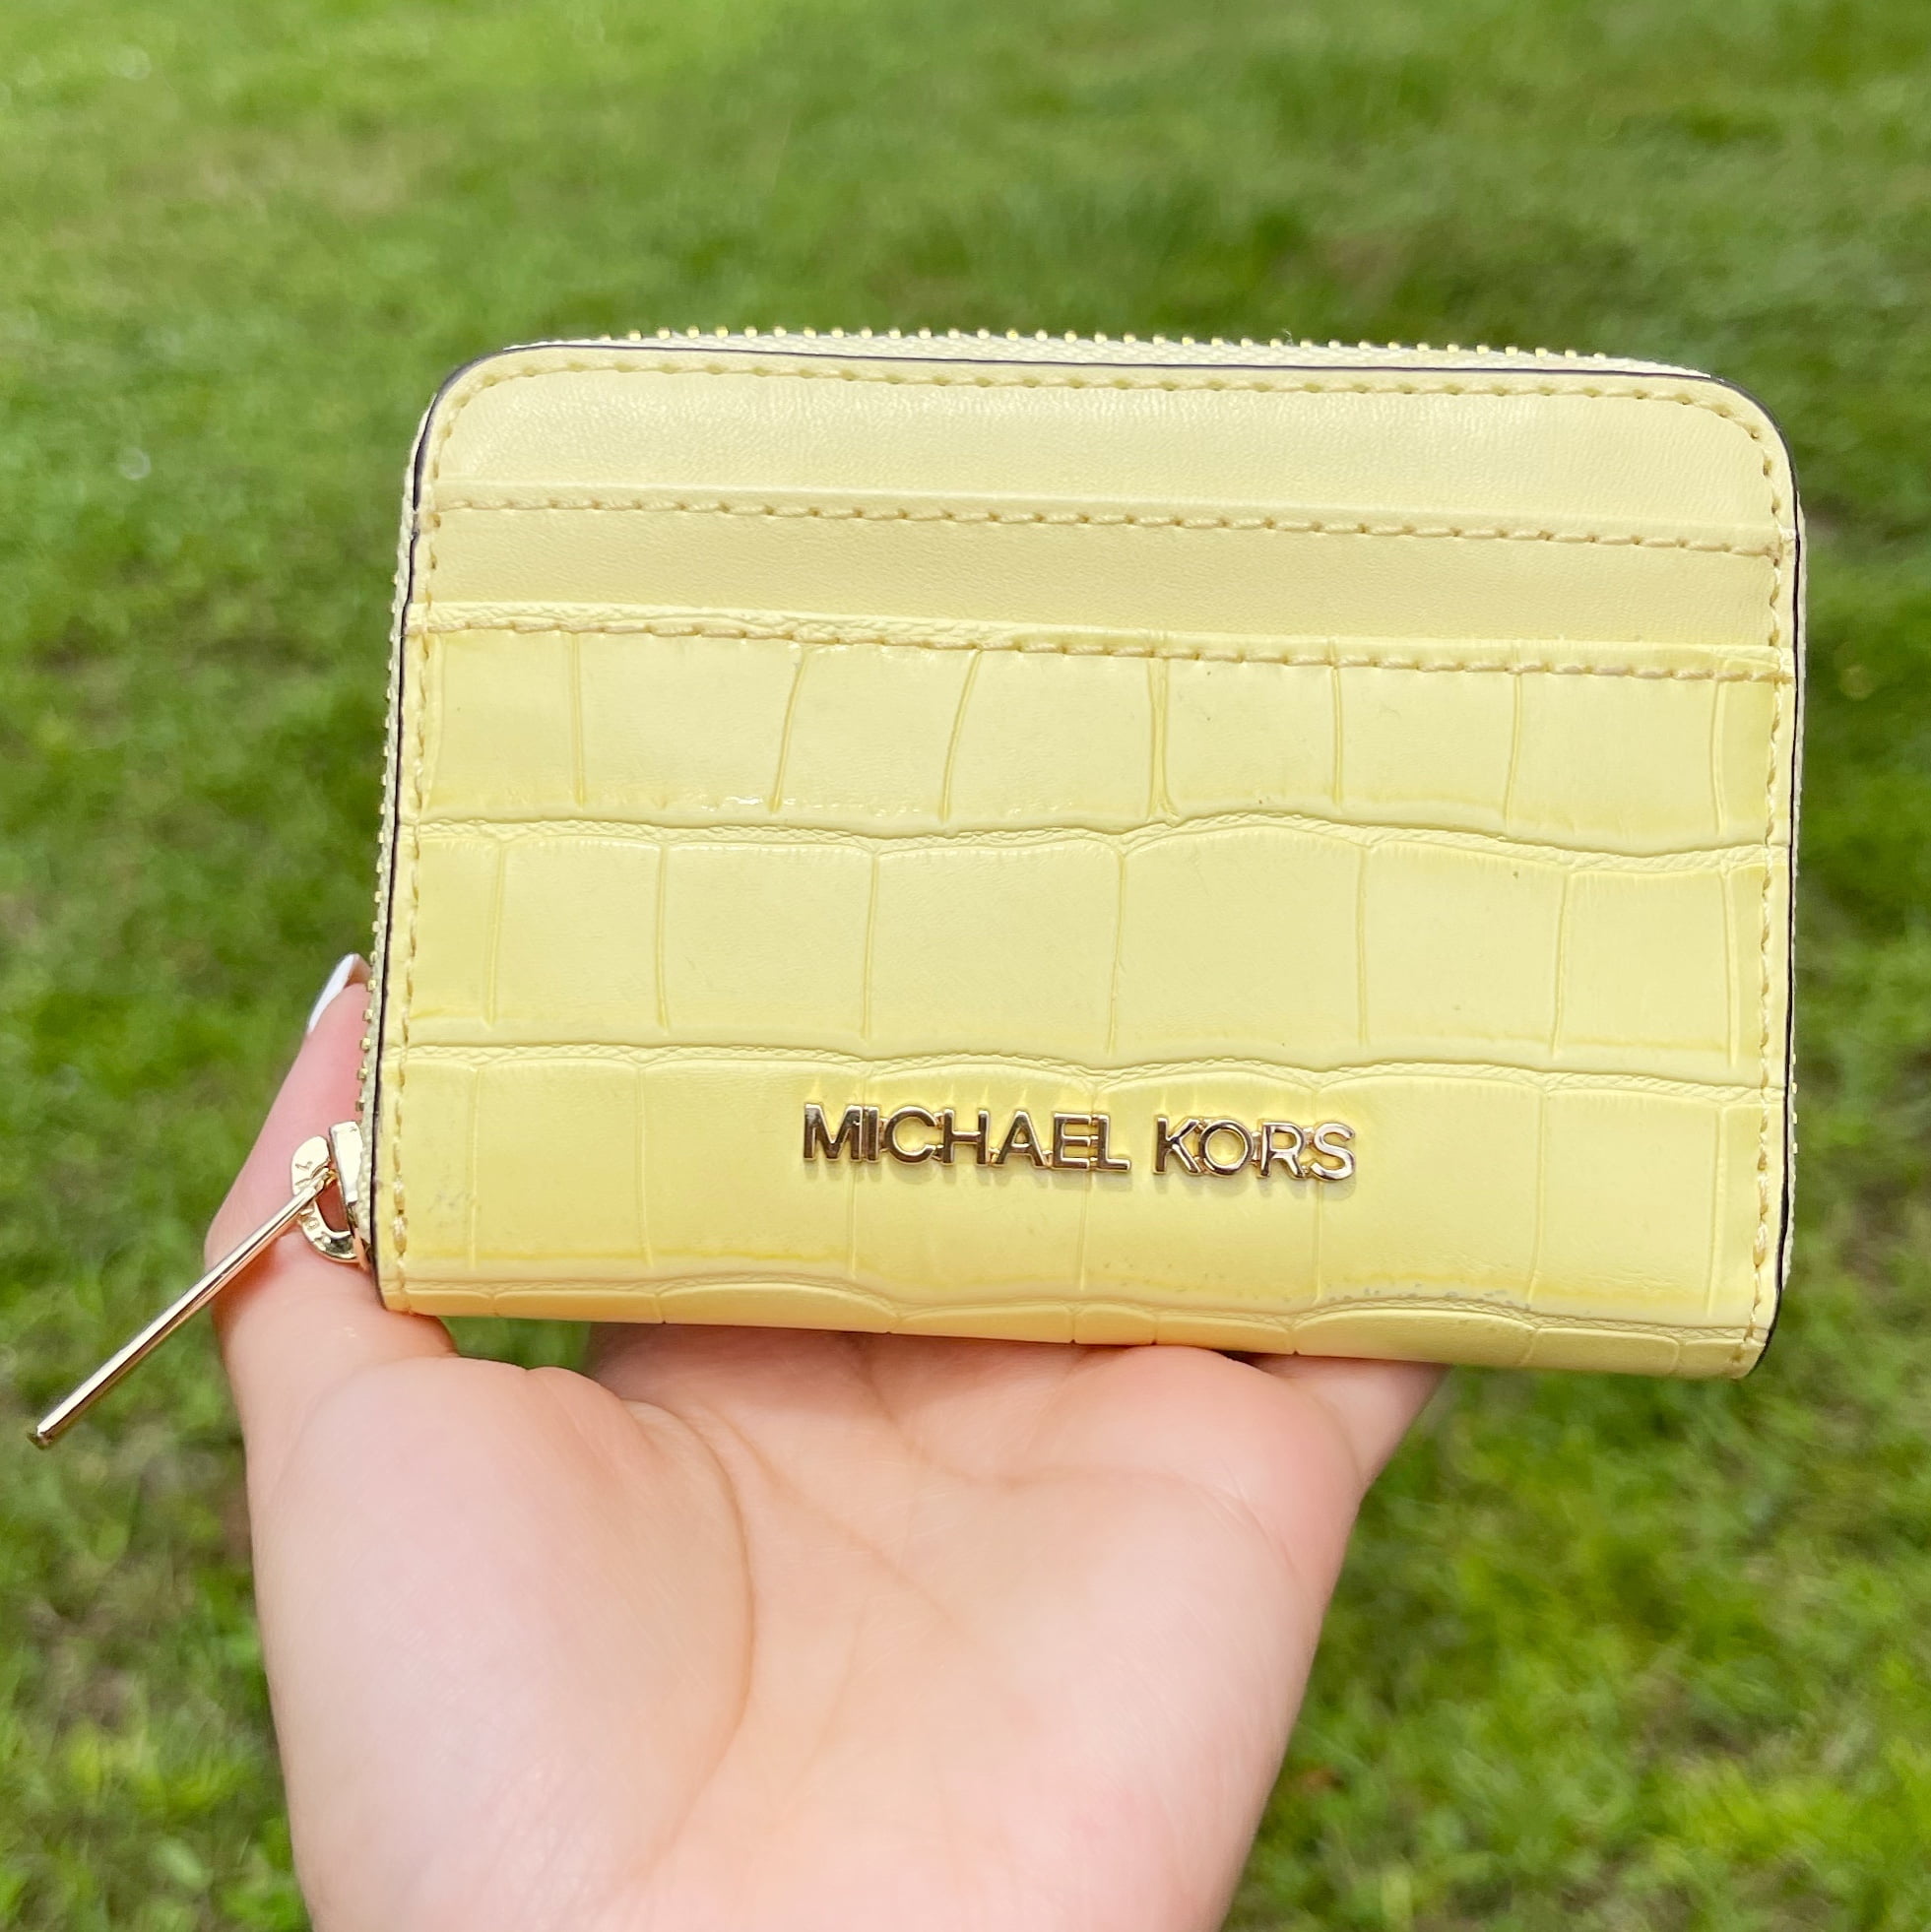 michael kors yellow wallet